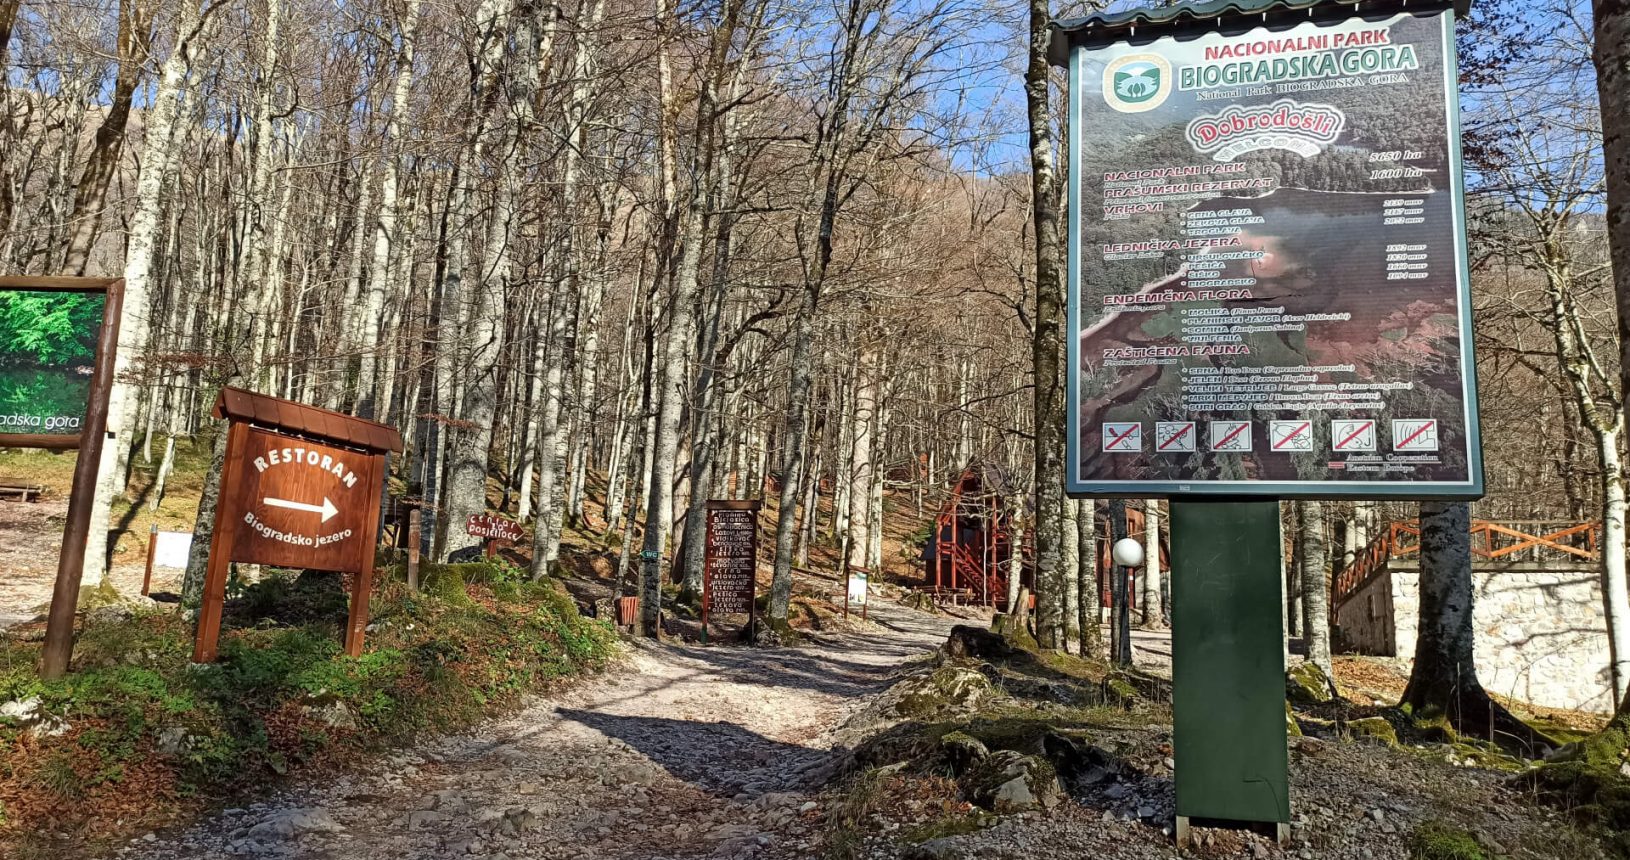 National Park Biogradska Gora sign